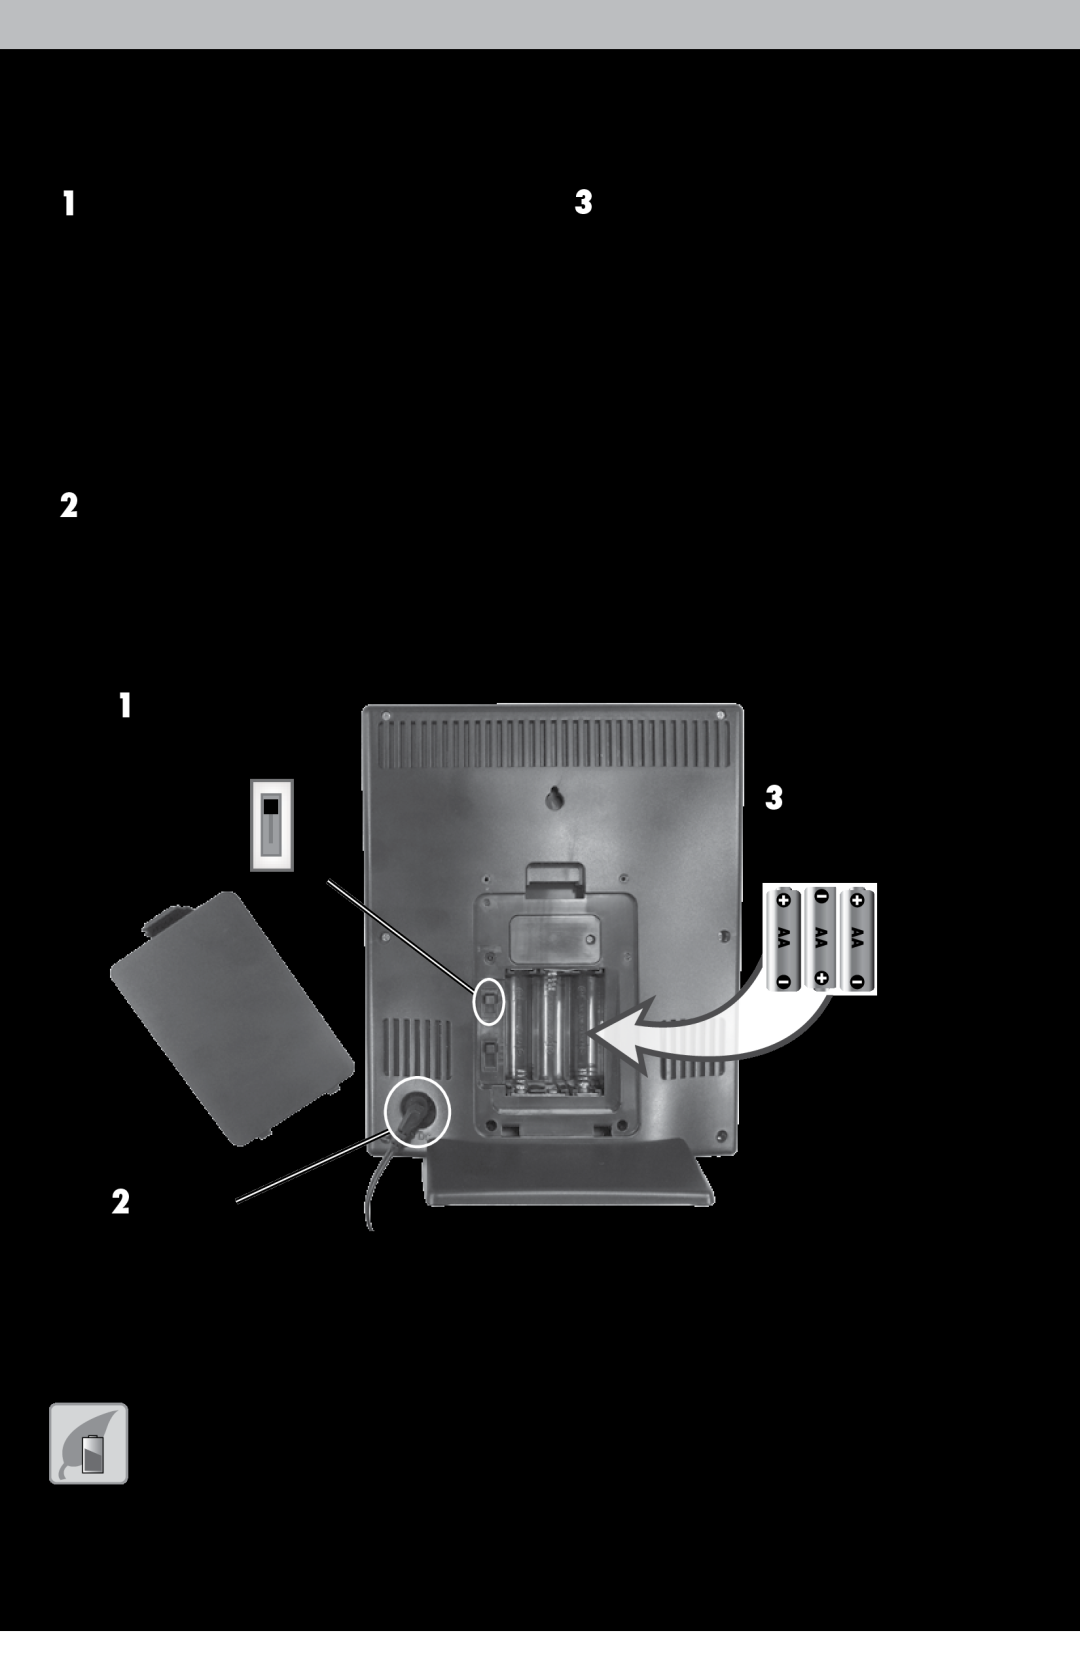 Acu-Rite 2008 instruction manual Display Unit Setup, Plug in Power Adapter, Set the A-B-C Switch, A B C 